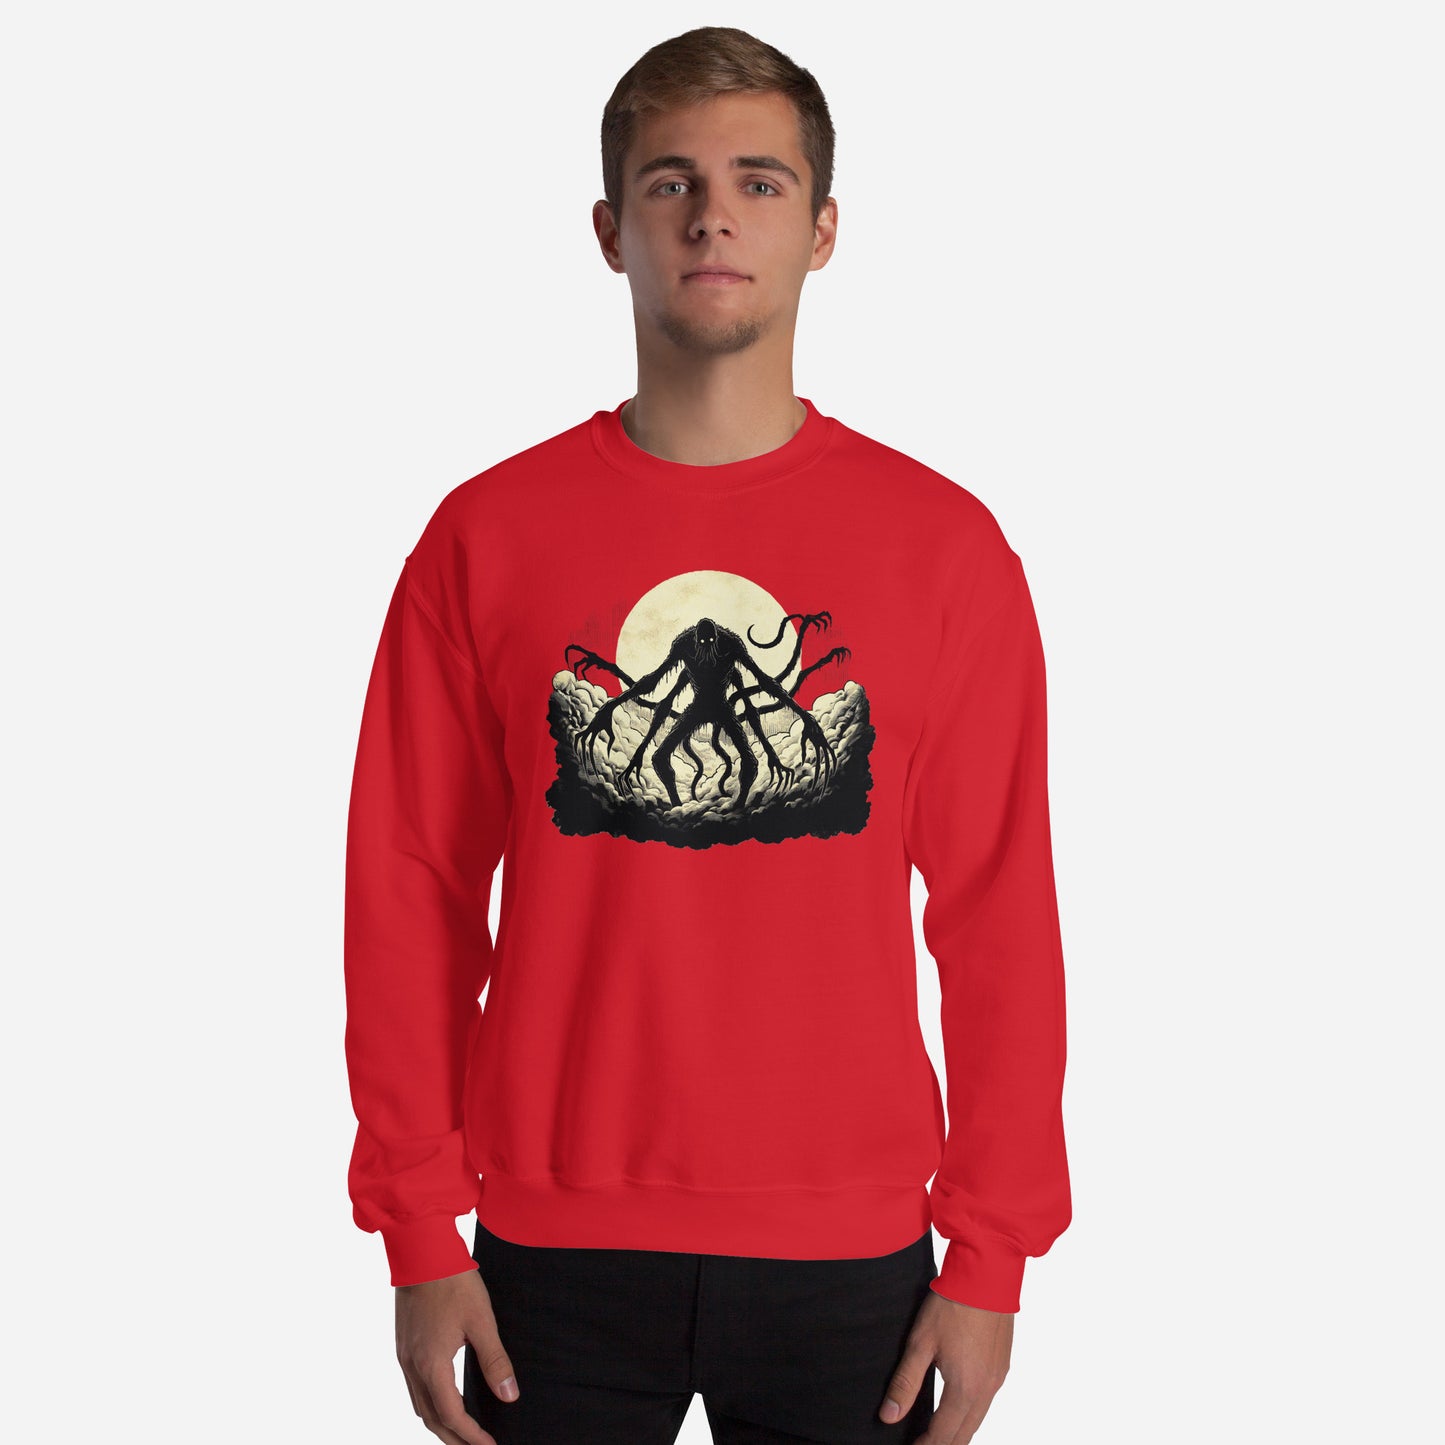 "corvillus" unisex sweatshirt